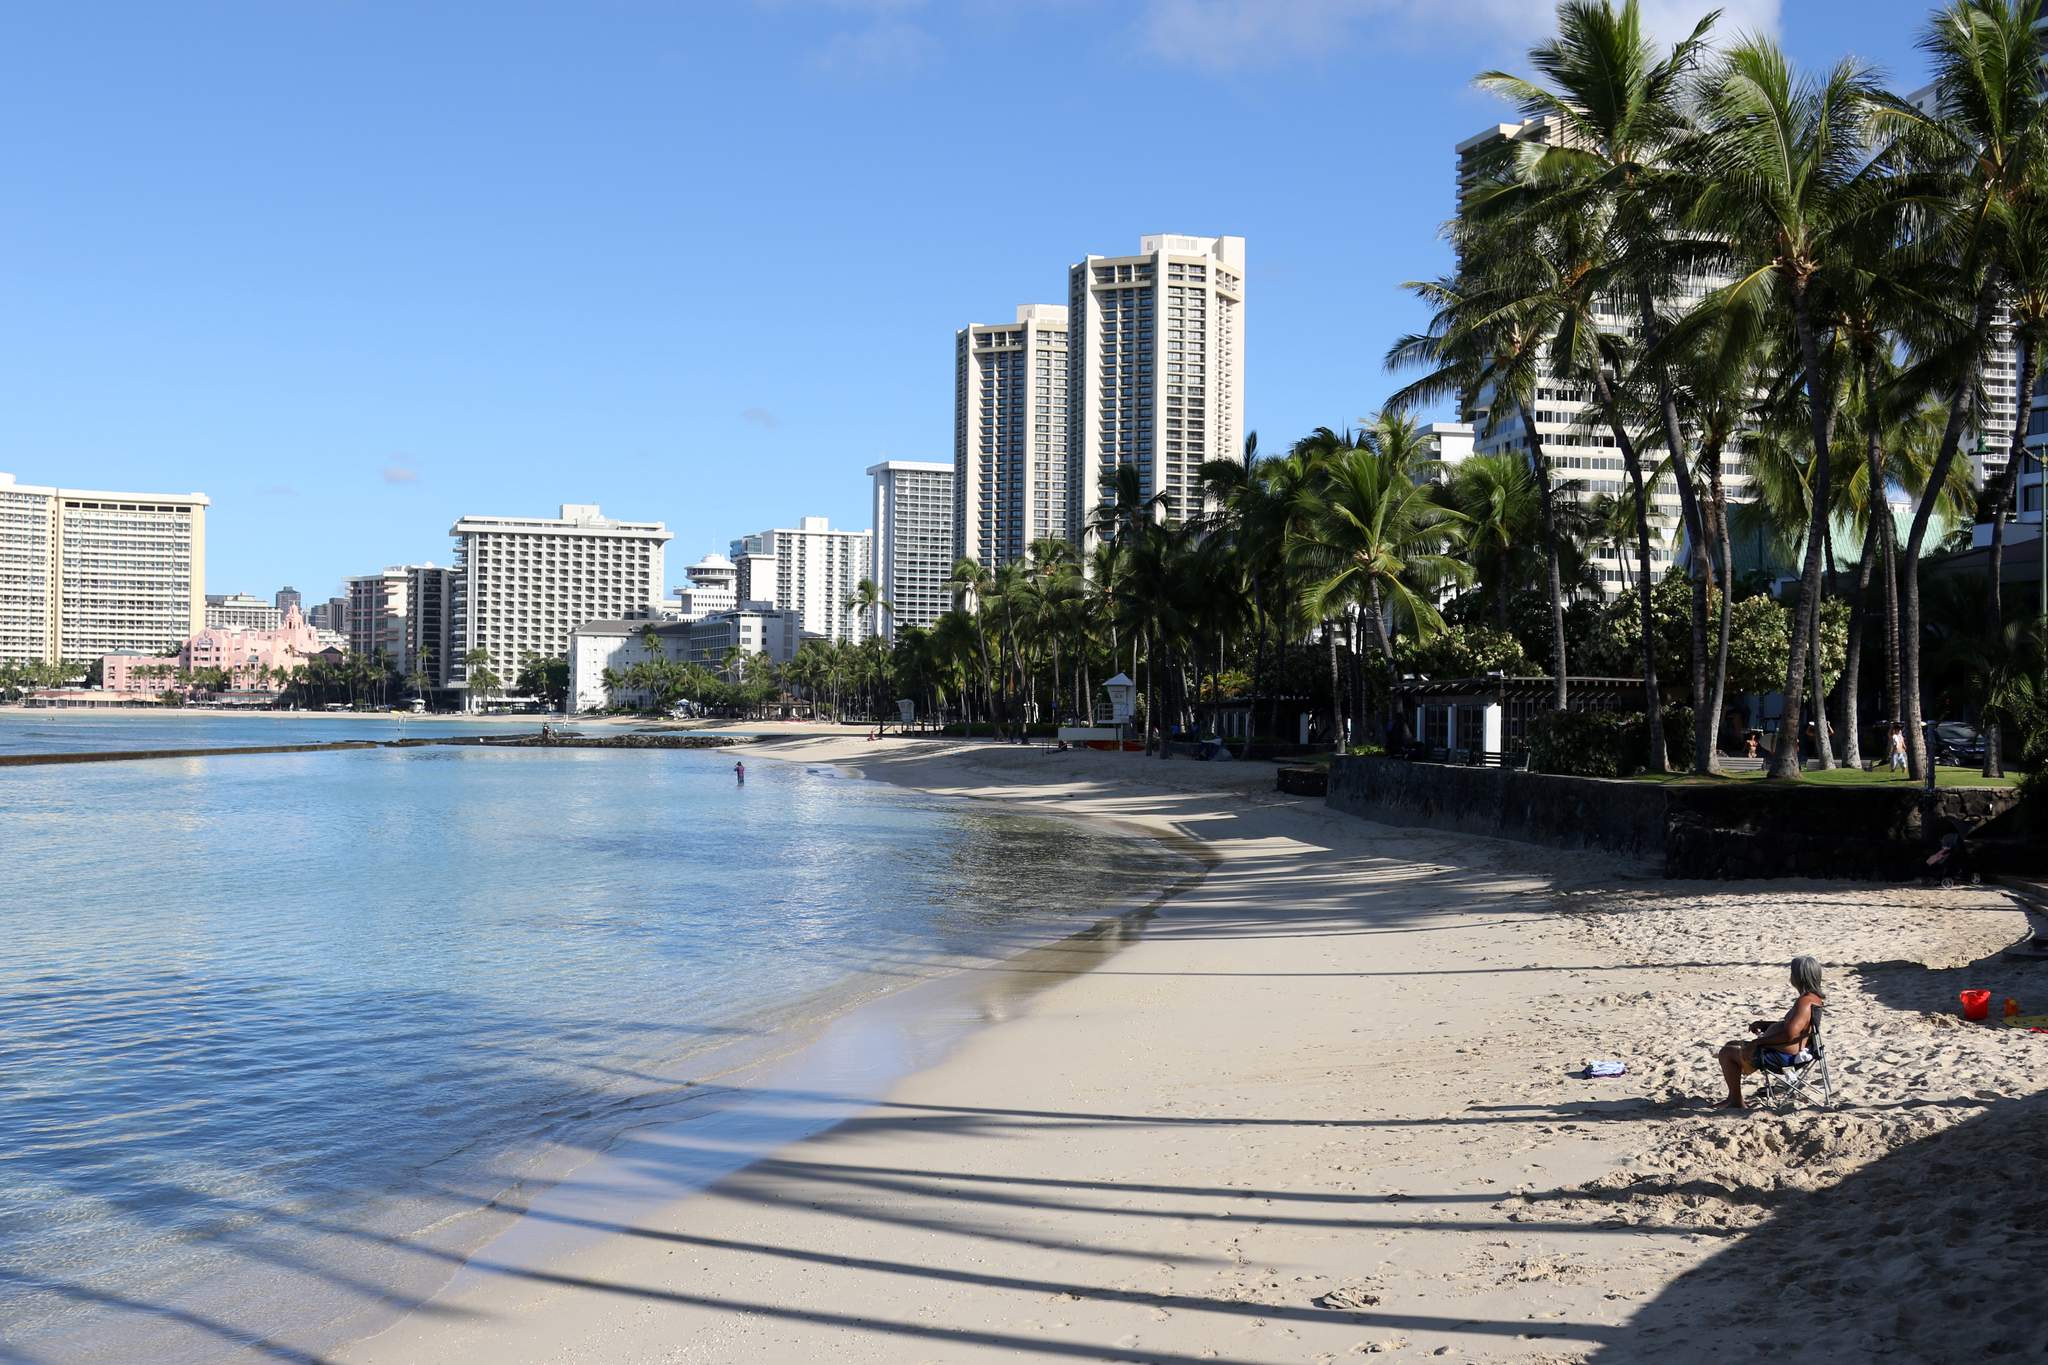 Hawaii gets tourism surge as coronavirus rules loosen up